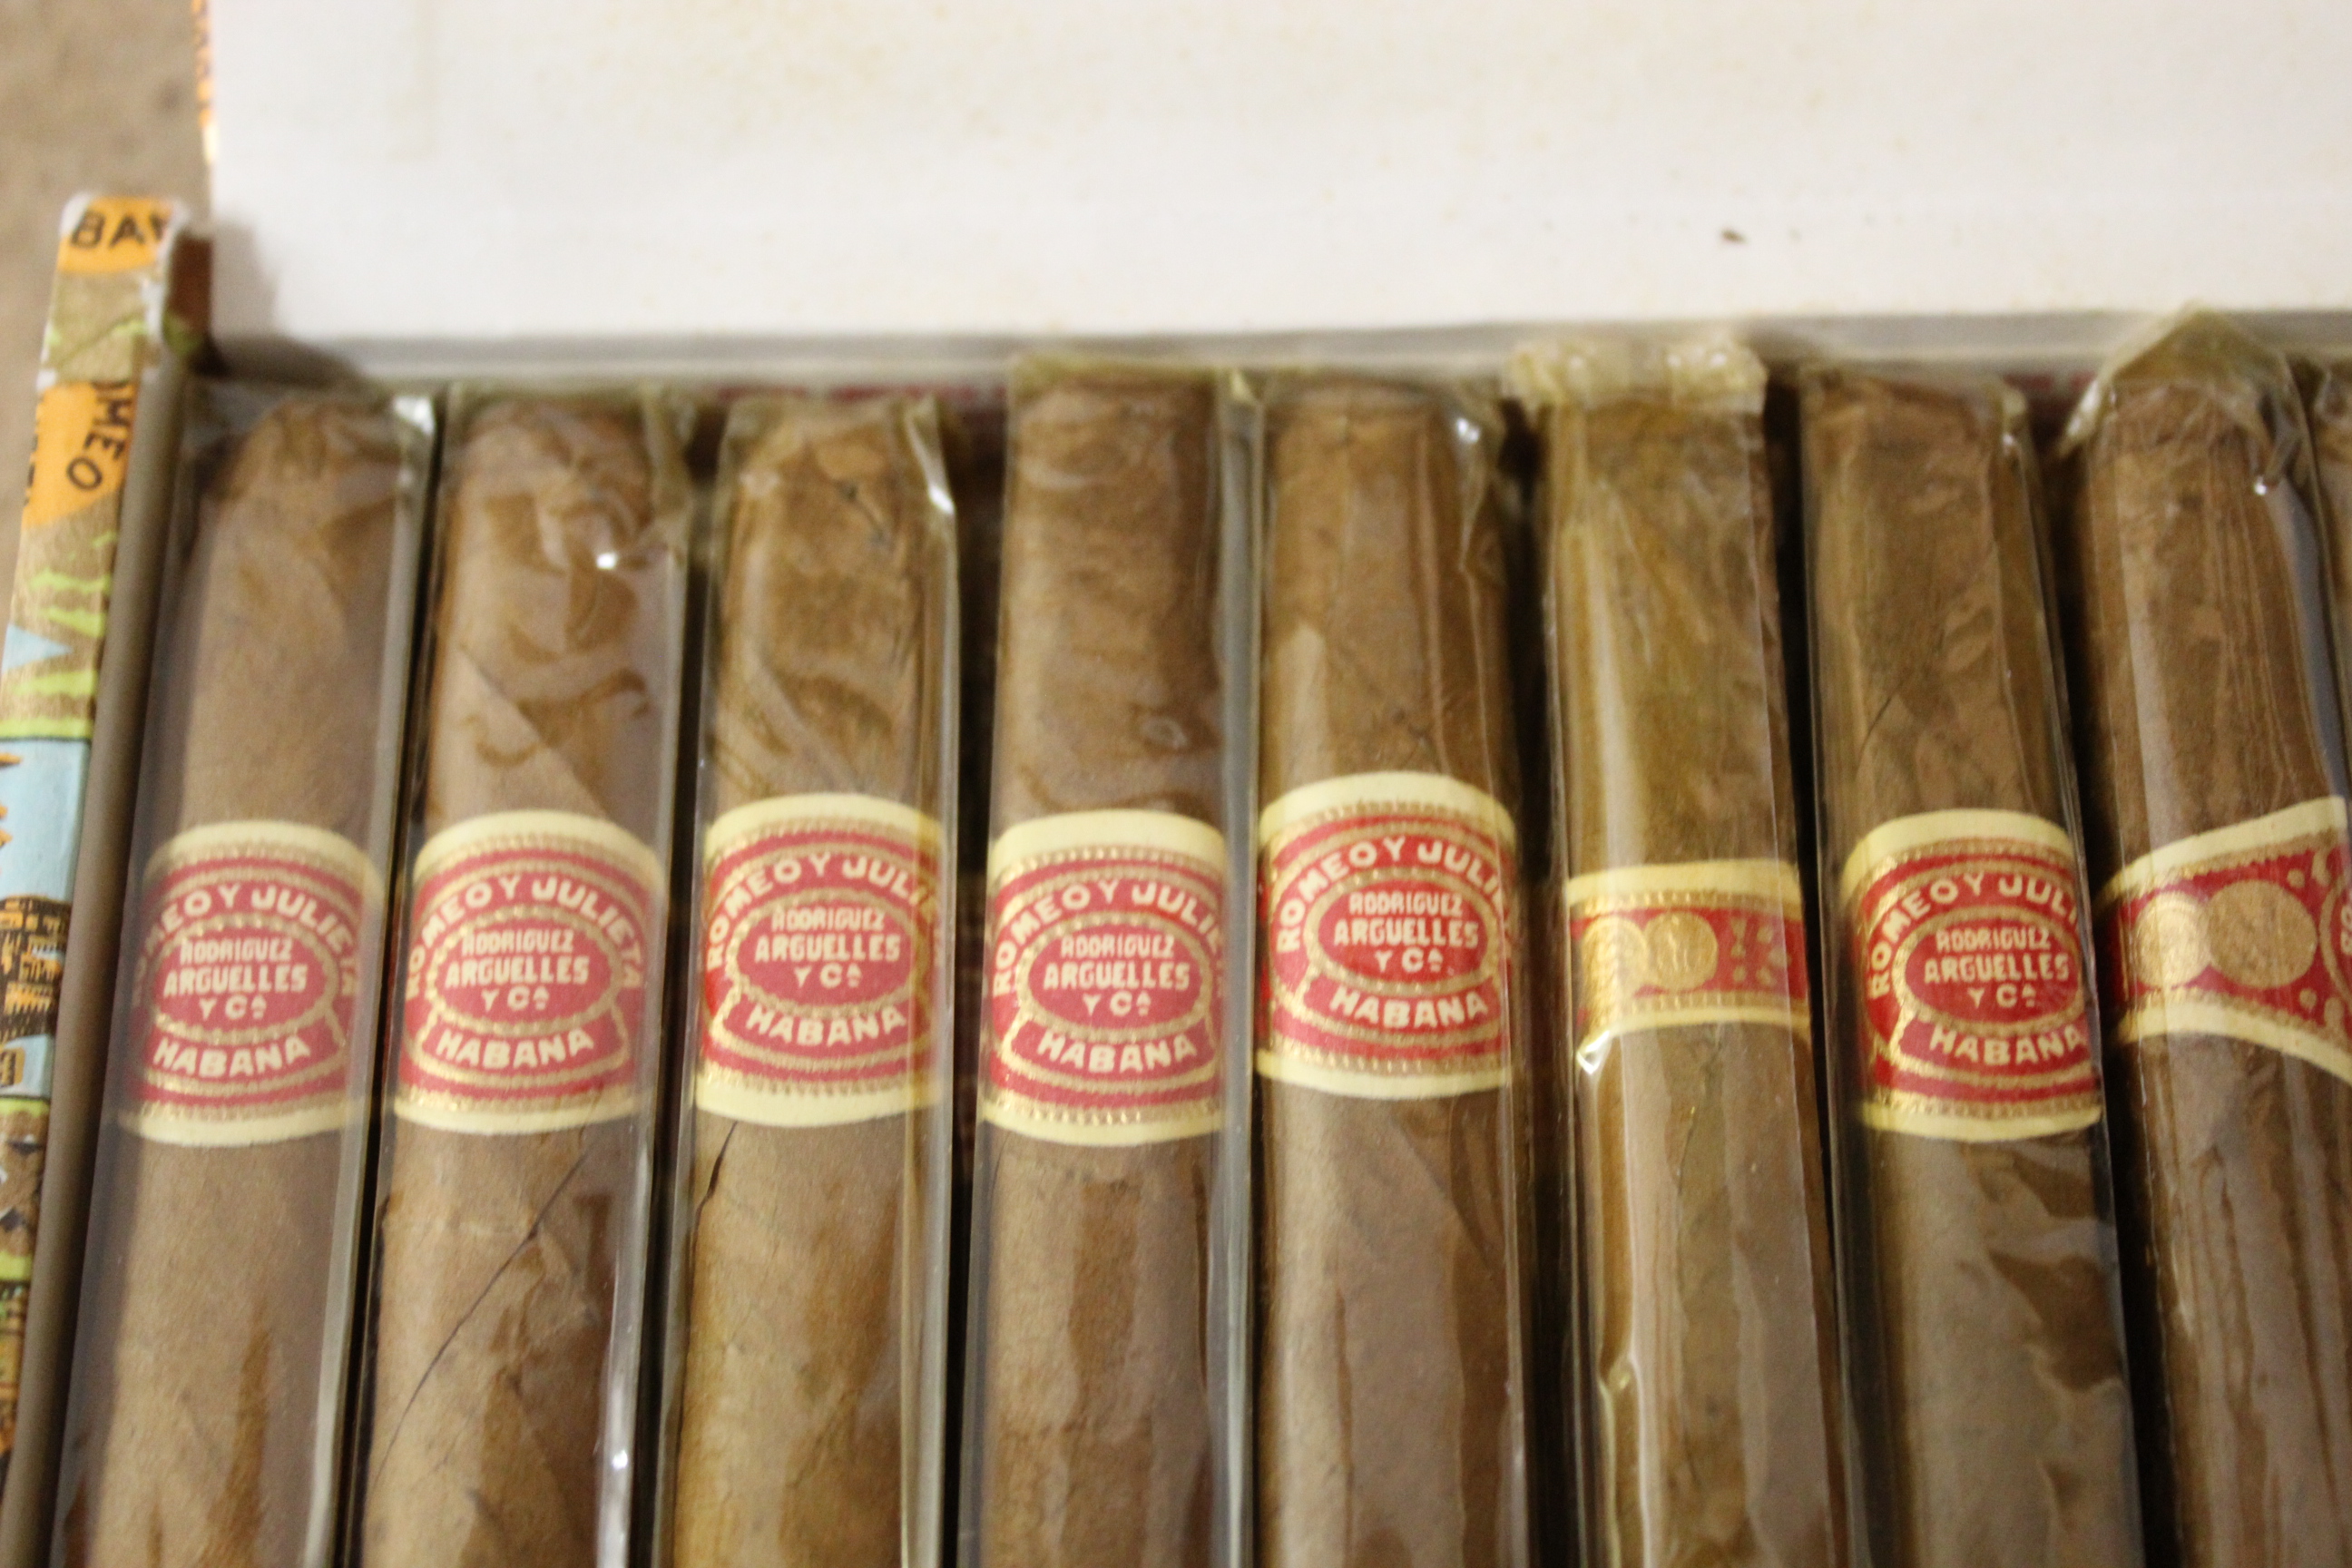 A box of Romeo y Julieta Habana Cuban cigars, 23 in original box with labels, - Image 2 of 3